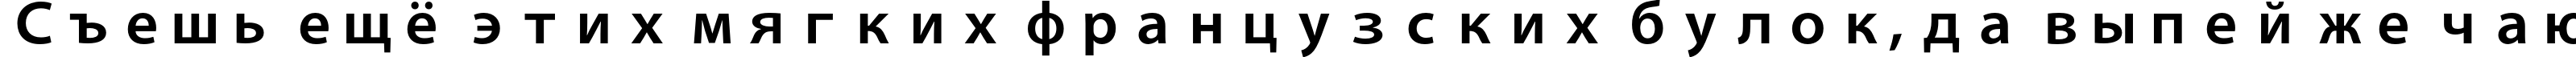 Пример написания шрифтом Adobe Gothic Std B текста на русском